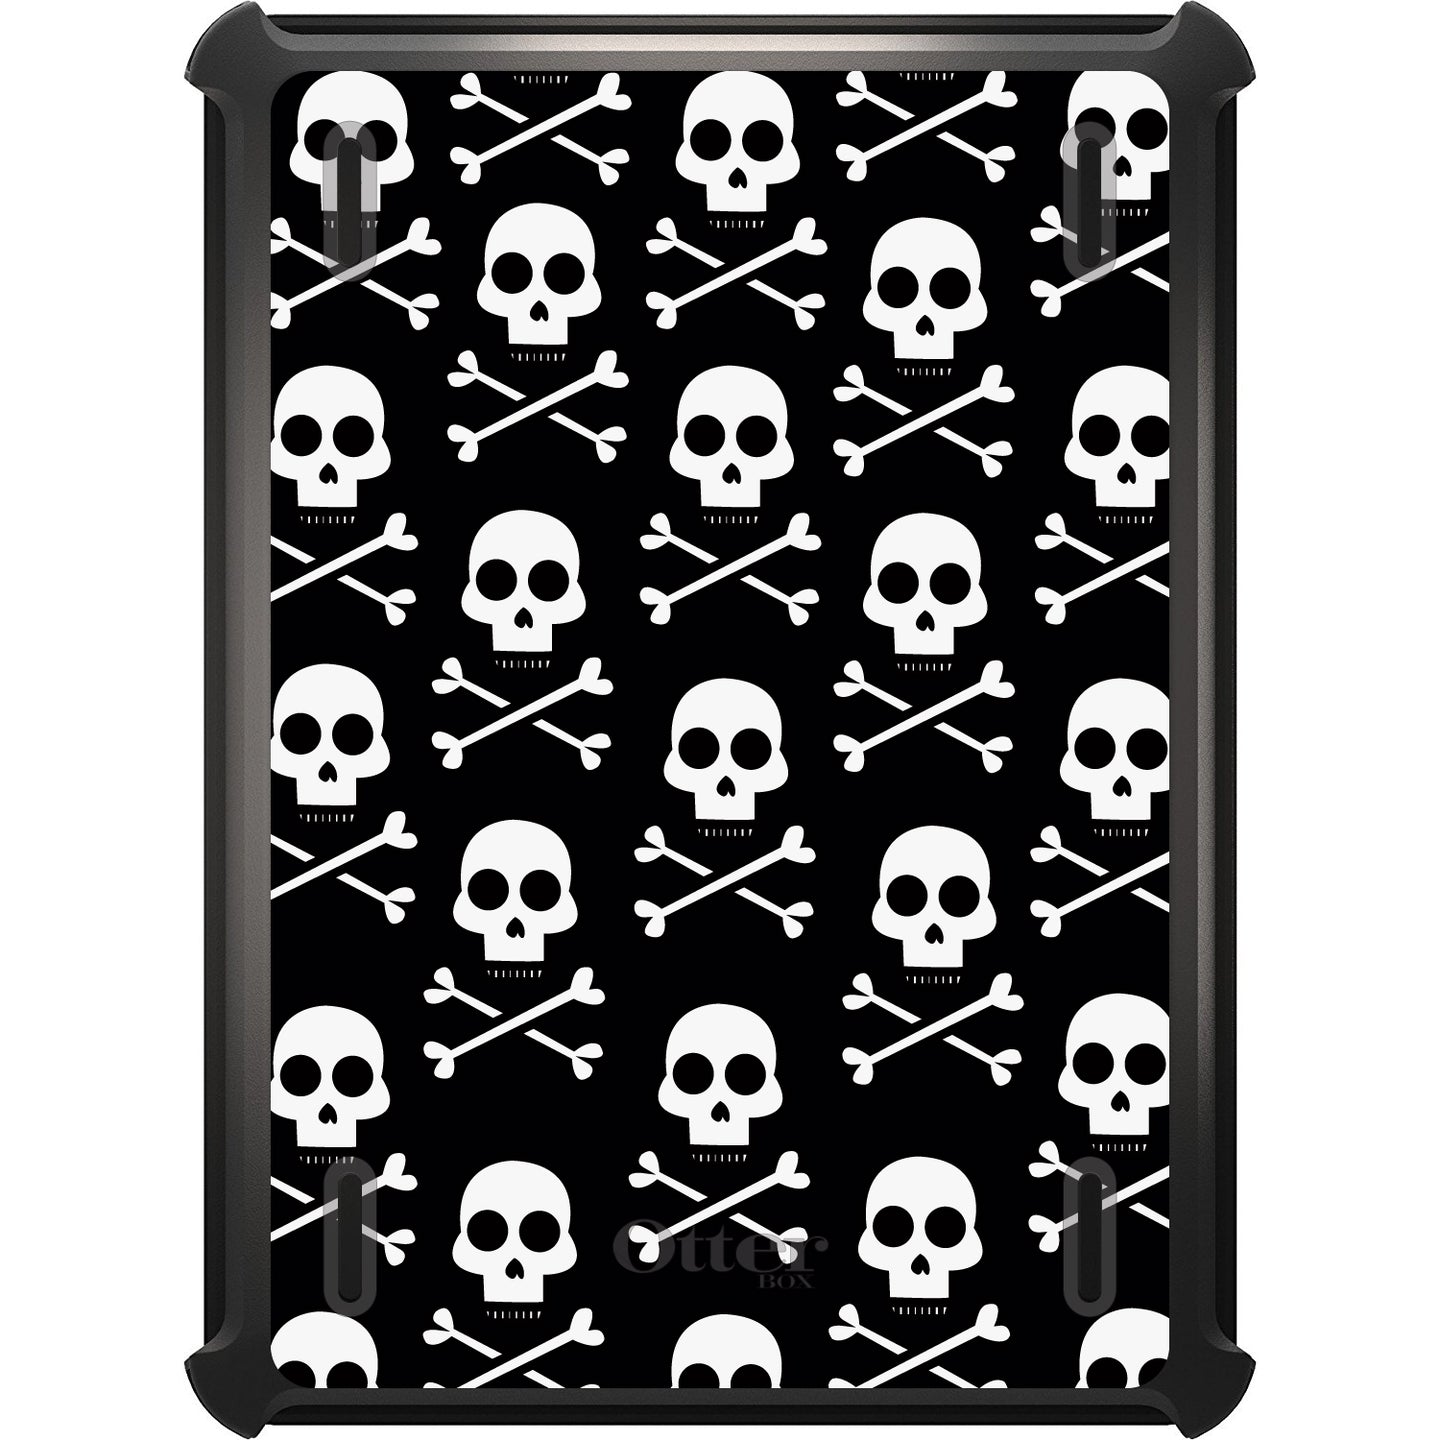 DistinctInk™ OtterBox Defender Series Case for Apple iPad / iPad Pro / iPad Air / iPad Mini - Black White Skulls Pattern